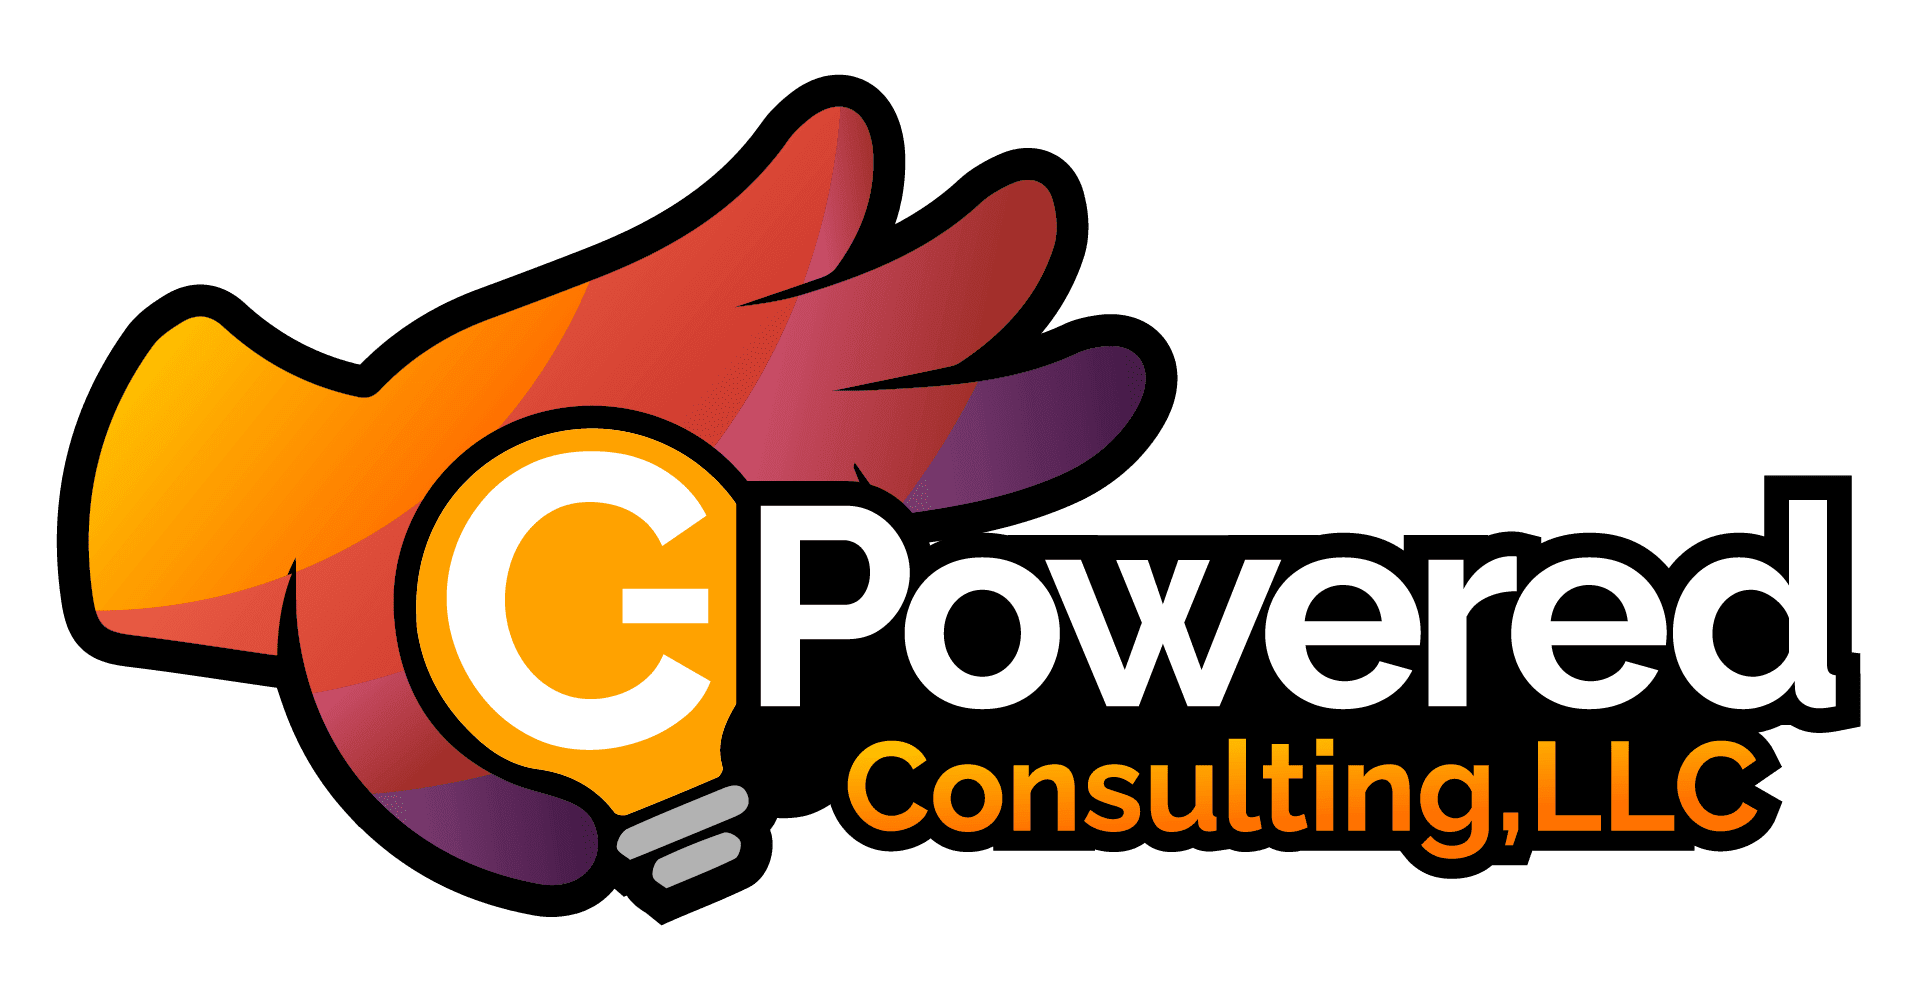 C-Powered Consulting, LLC